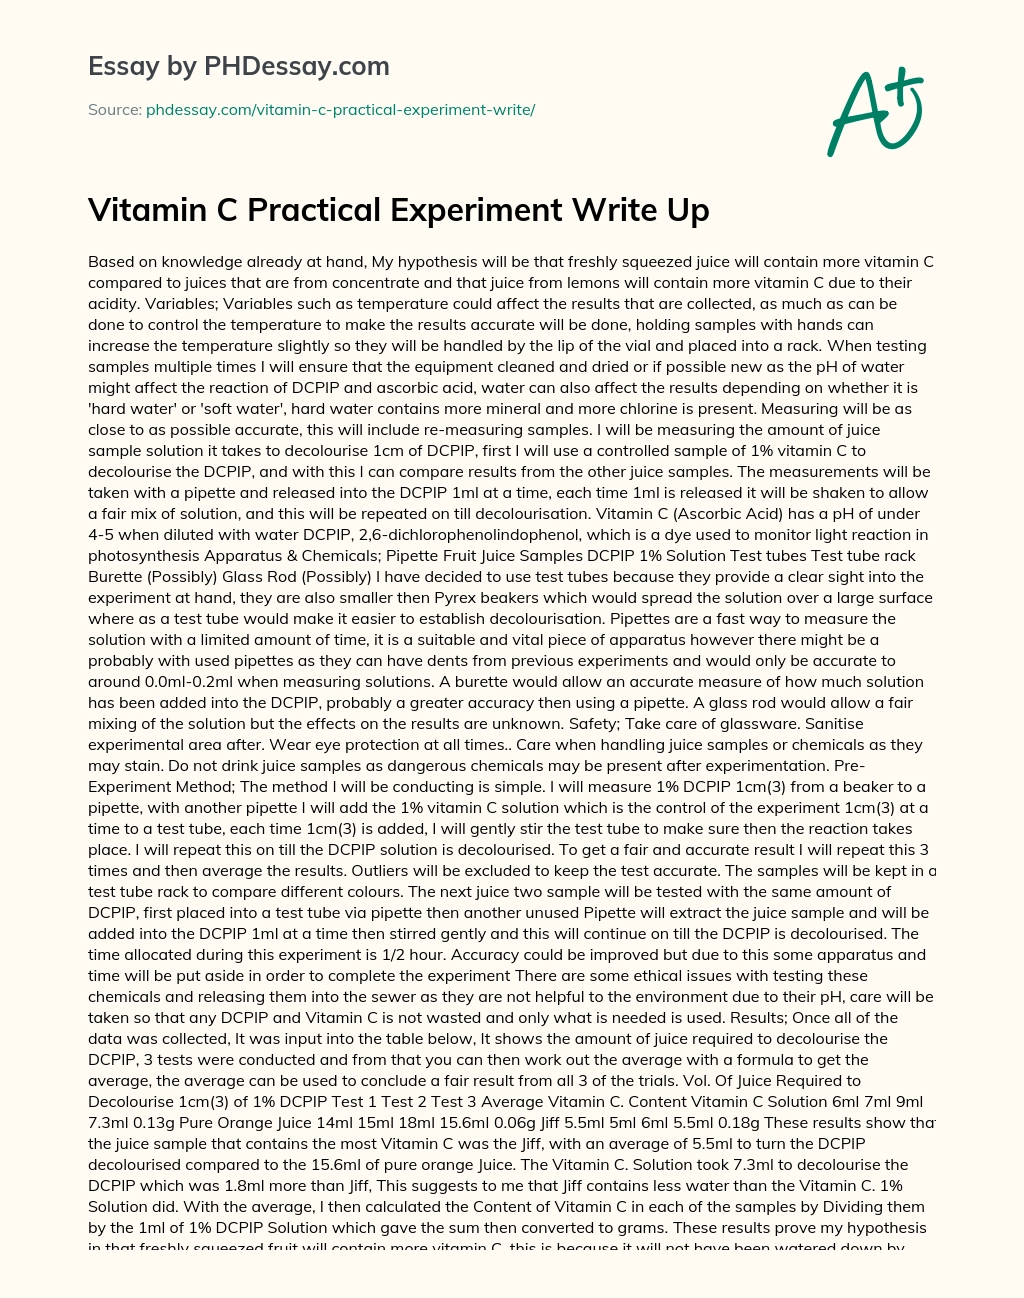 Vitamin C Practical Experiment Write Up essay